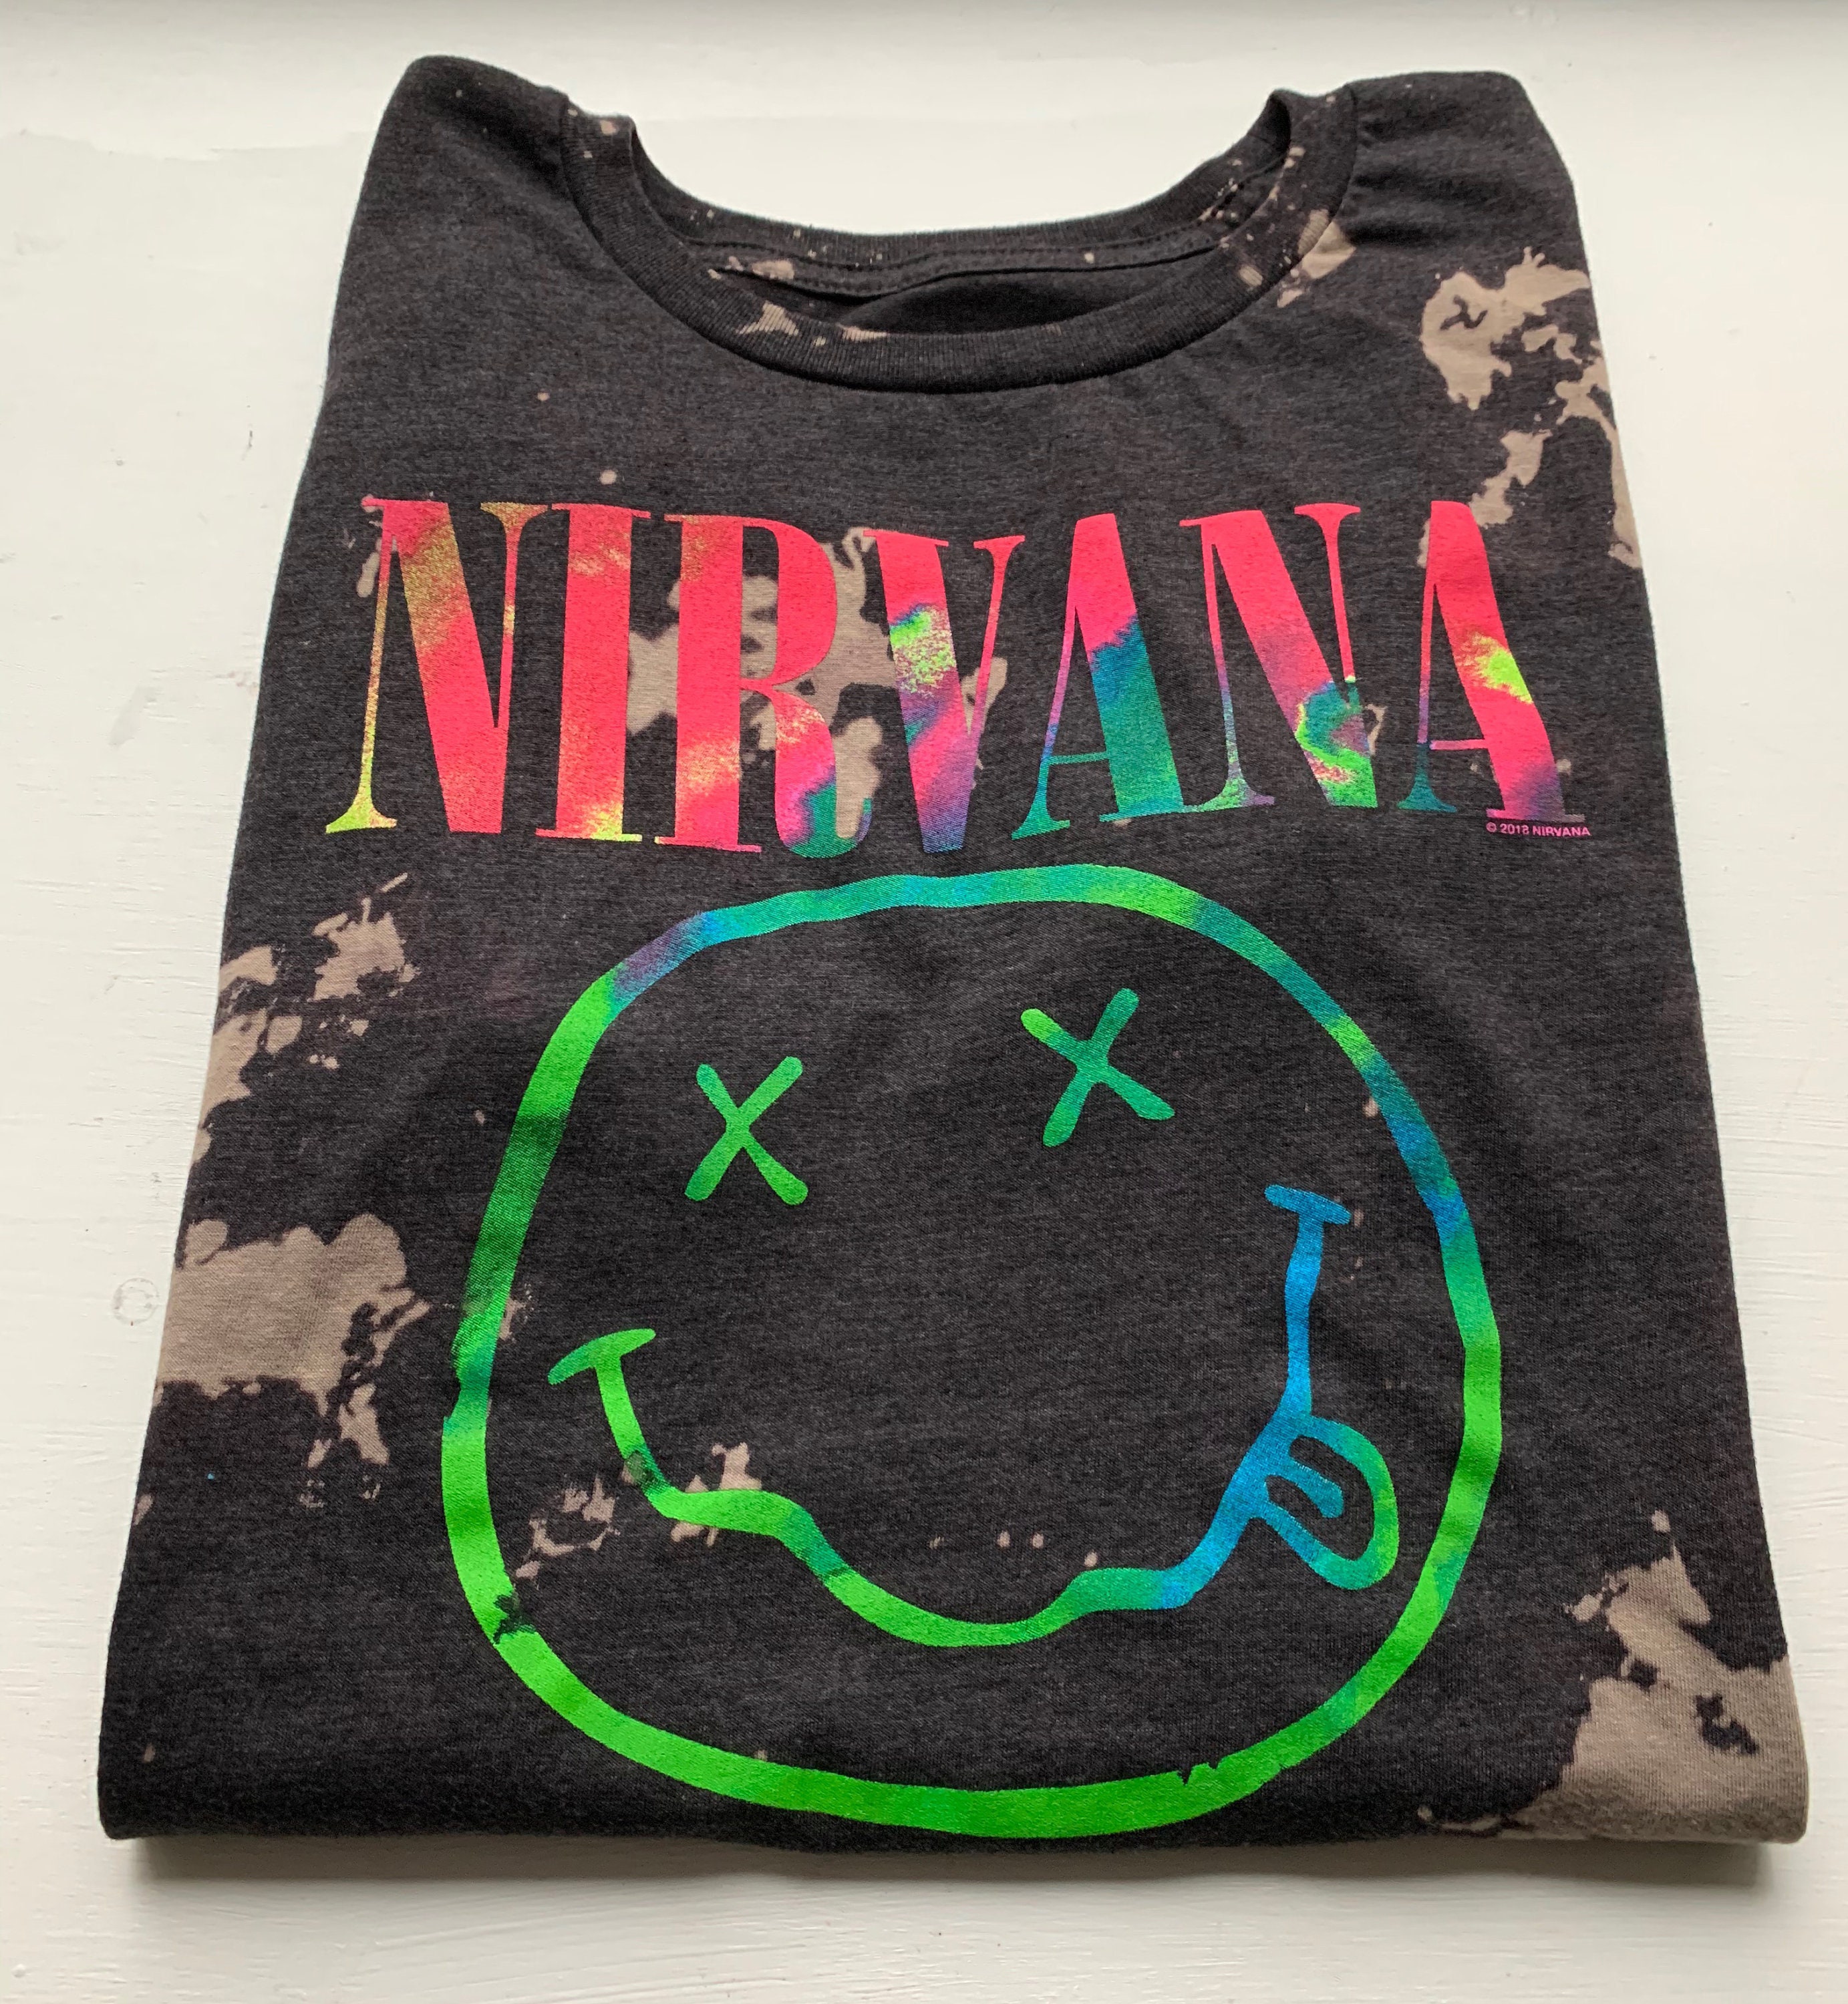 Nirvana Tie Dye Bleached Band Reverse Bleach T-shirt Vintage Inspired  Grunge Reverse Bleached Tee 90s Rock Tee Bleach Style Top 